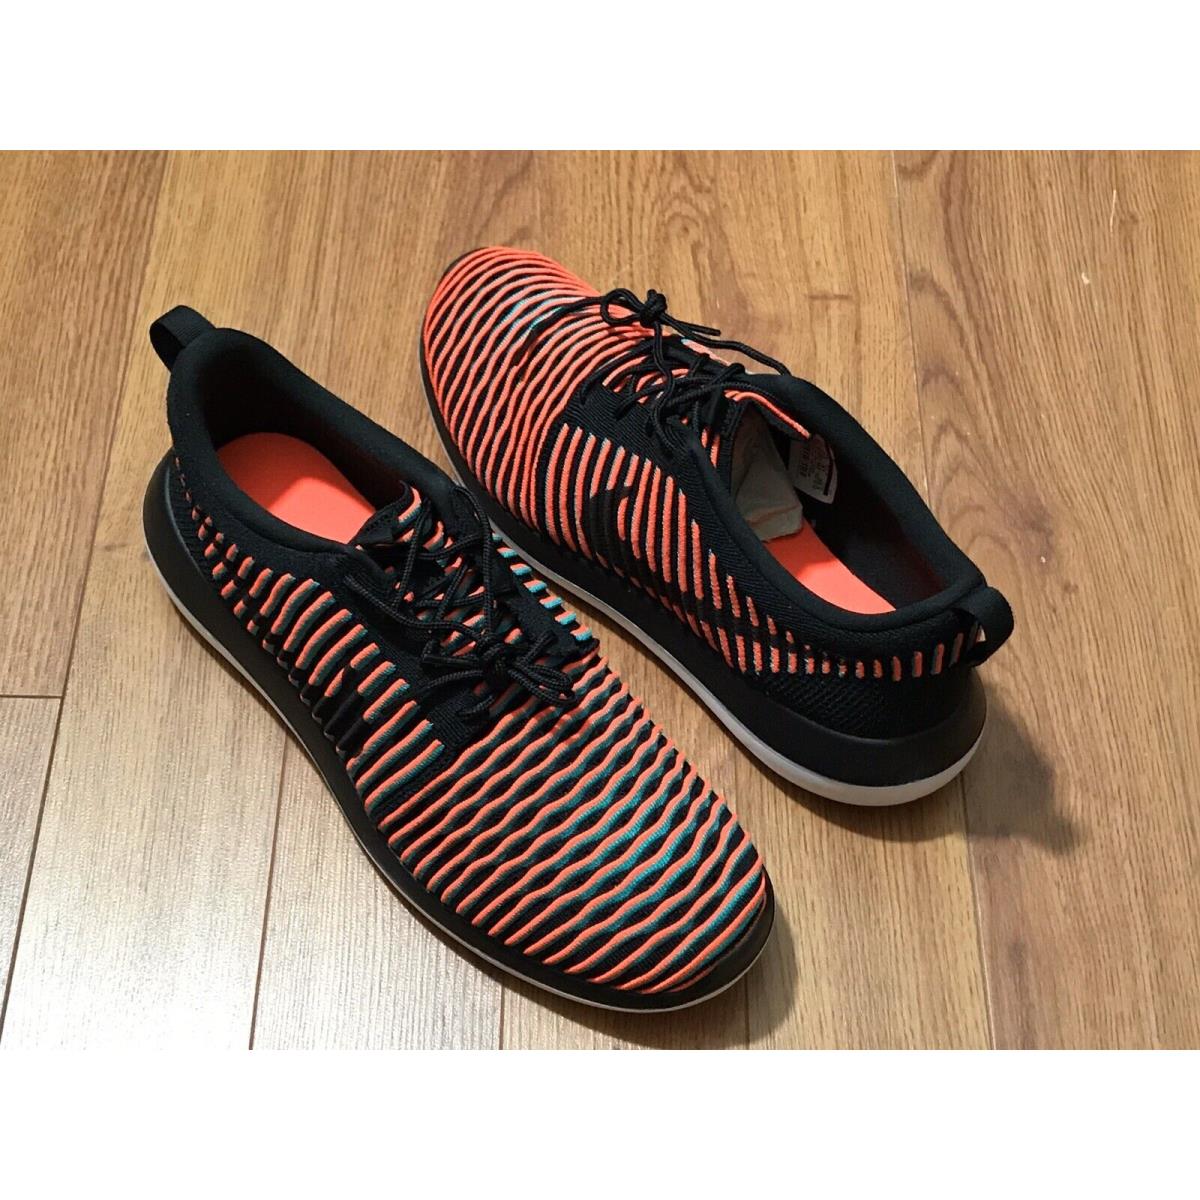 Nike shoes Roshe Two Flyknit - Black, Bright Crimson 1